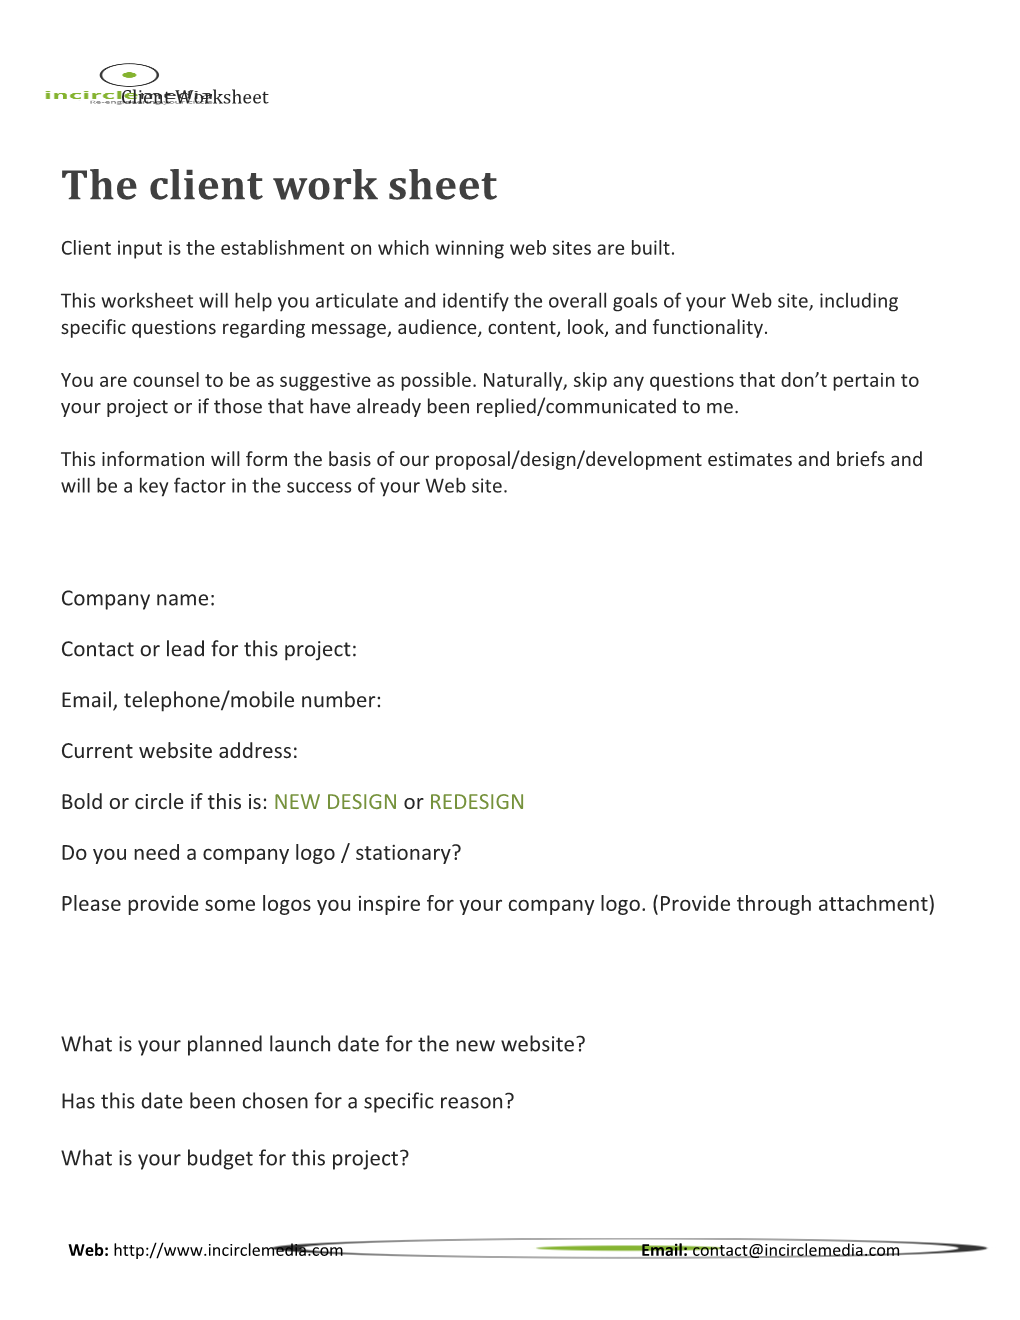 The Client Work Sheet